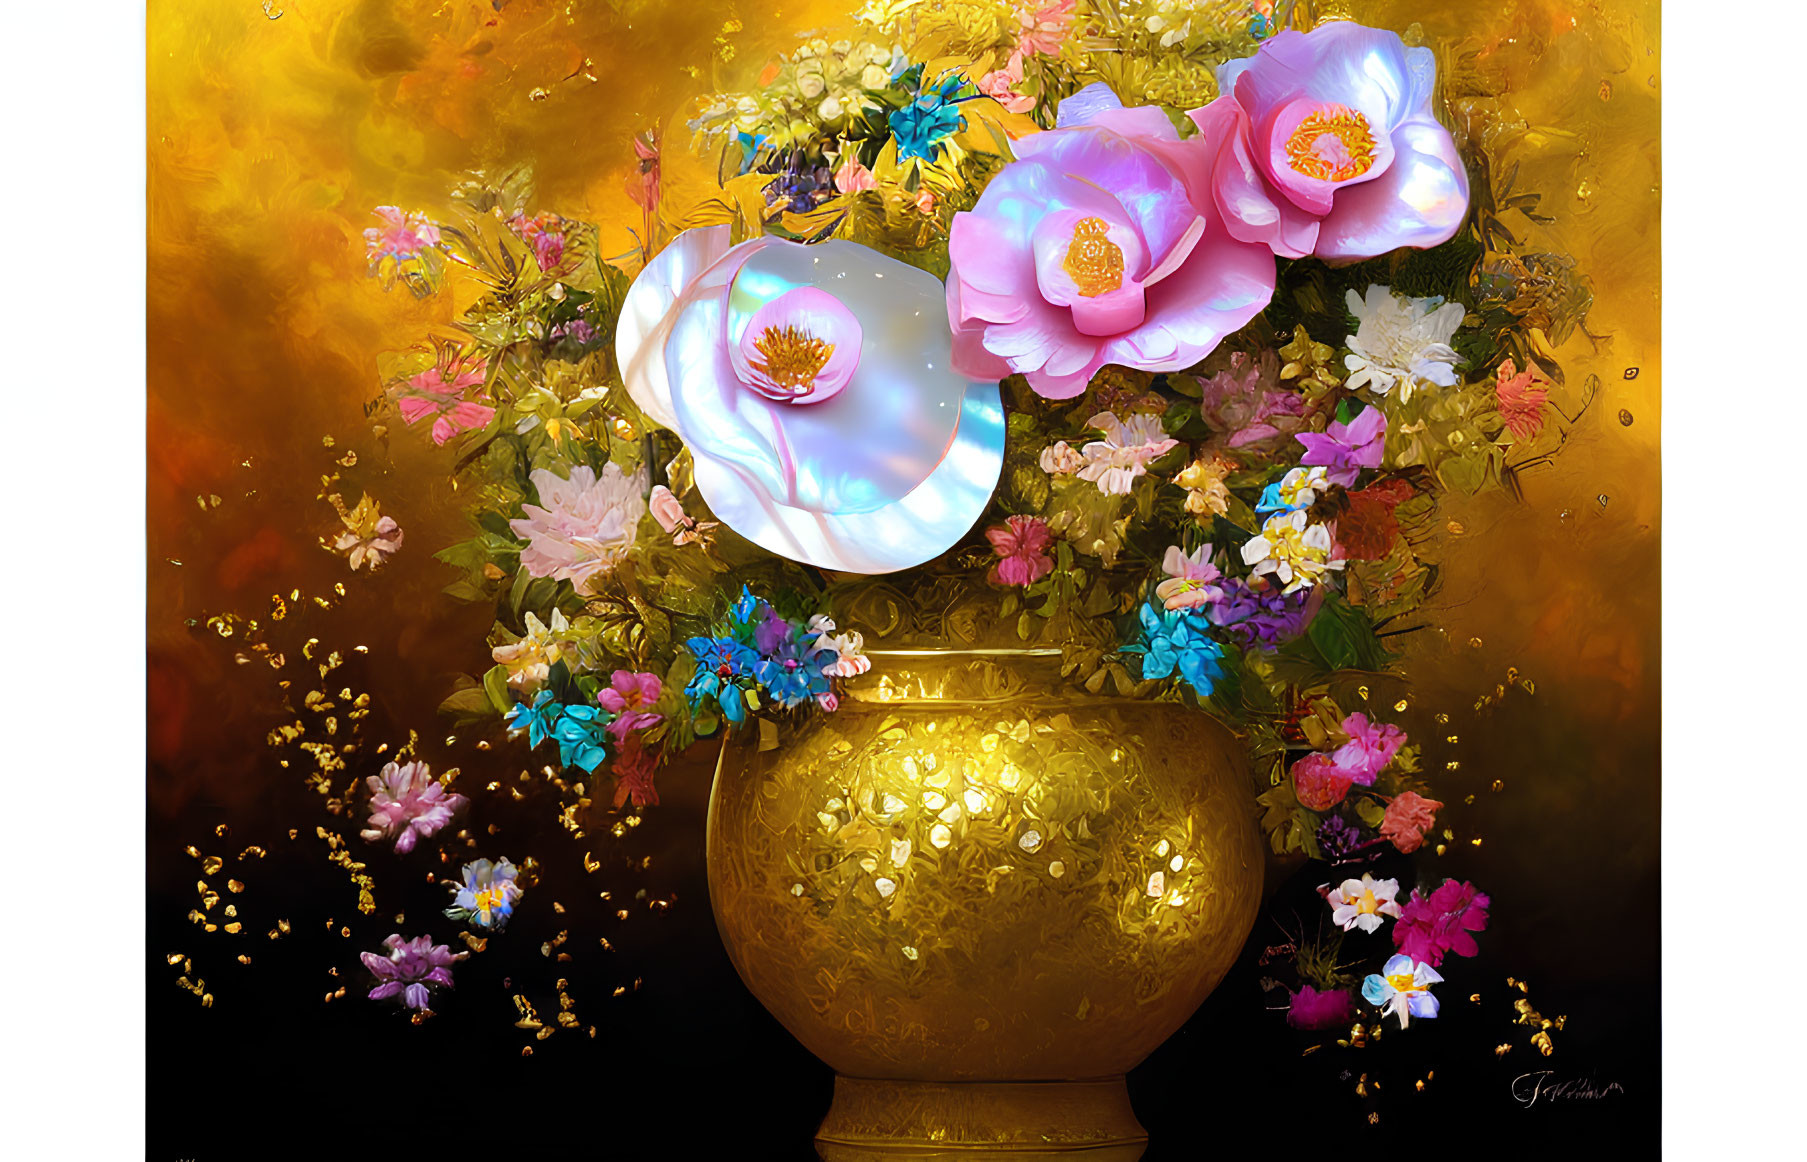 Colorful flowers in golden vase digital art piece.